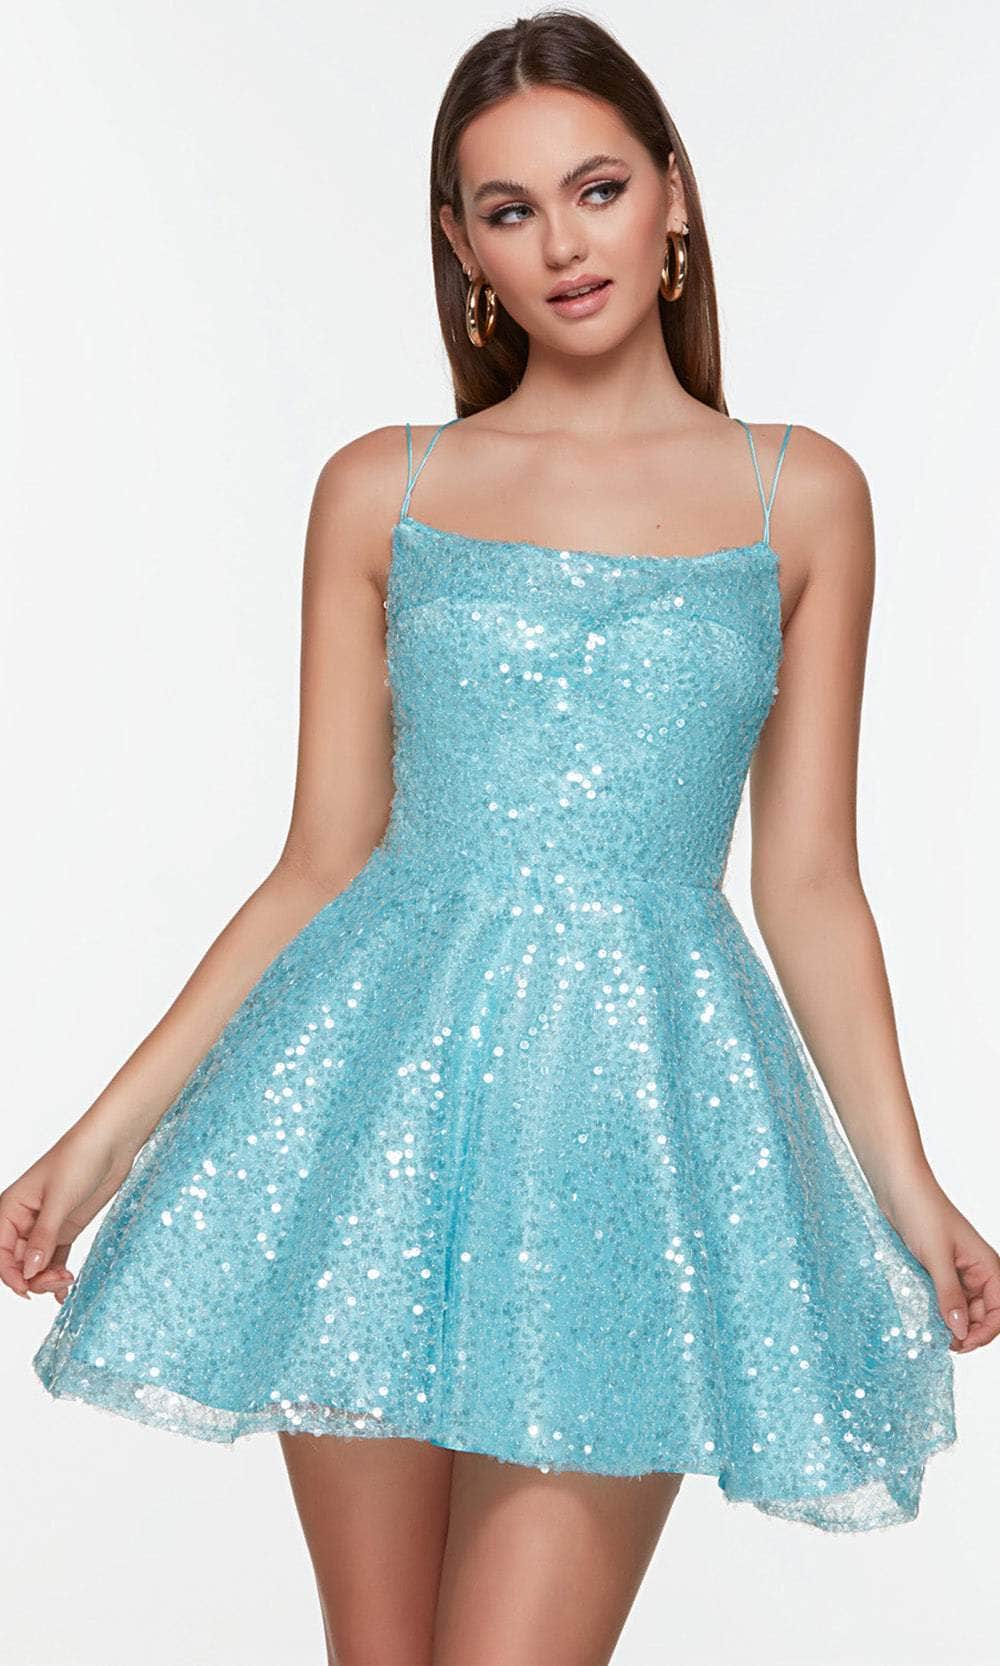 Alyce Paris - Sequin Dress 3108 In Blue